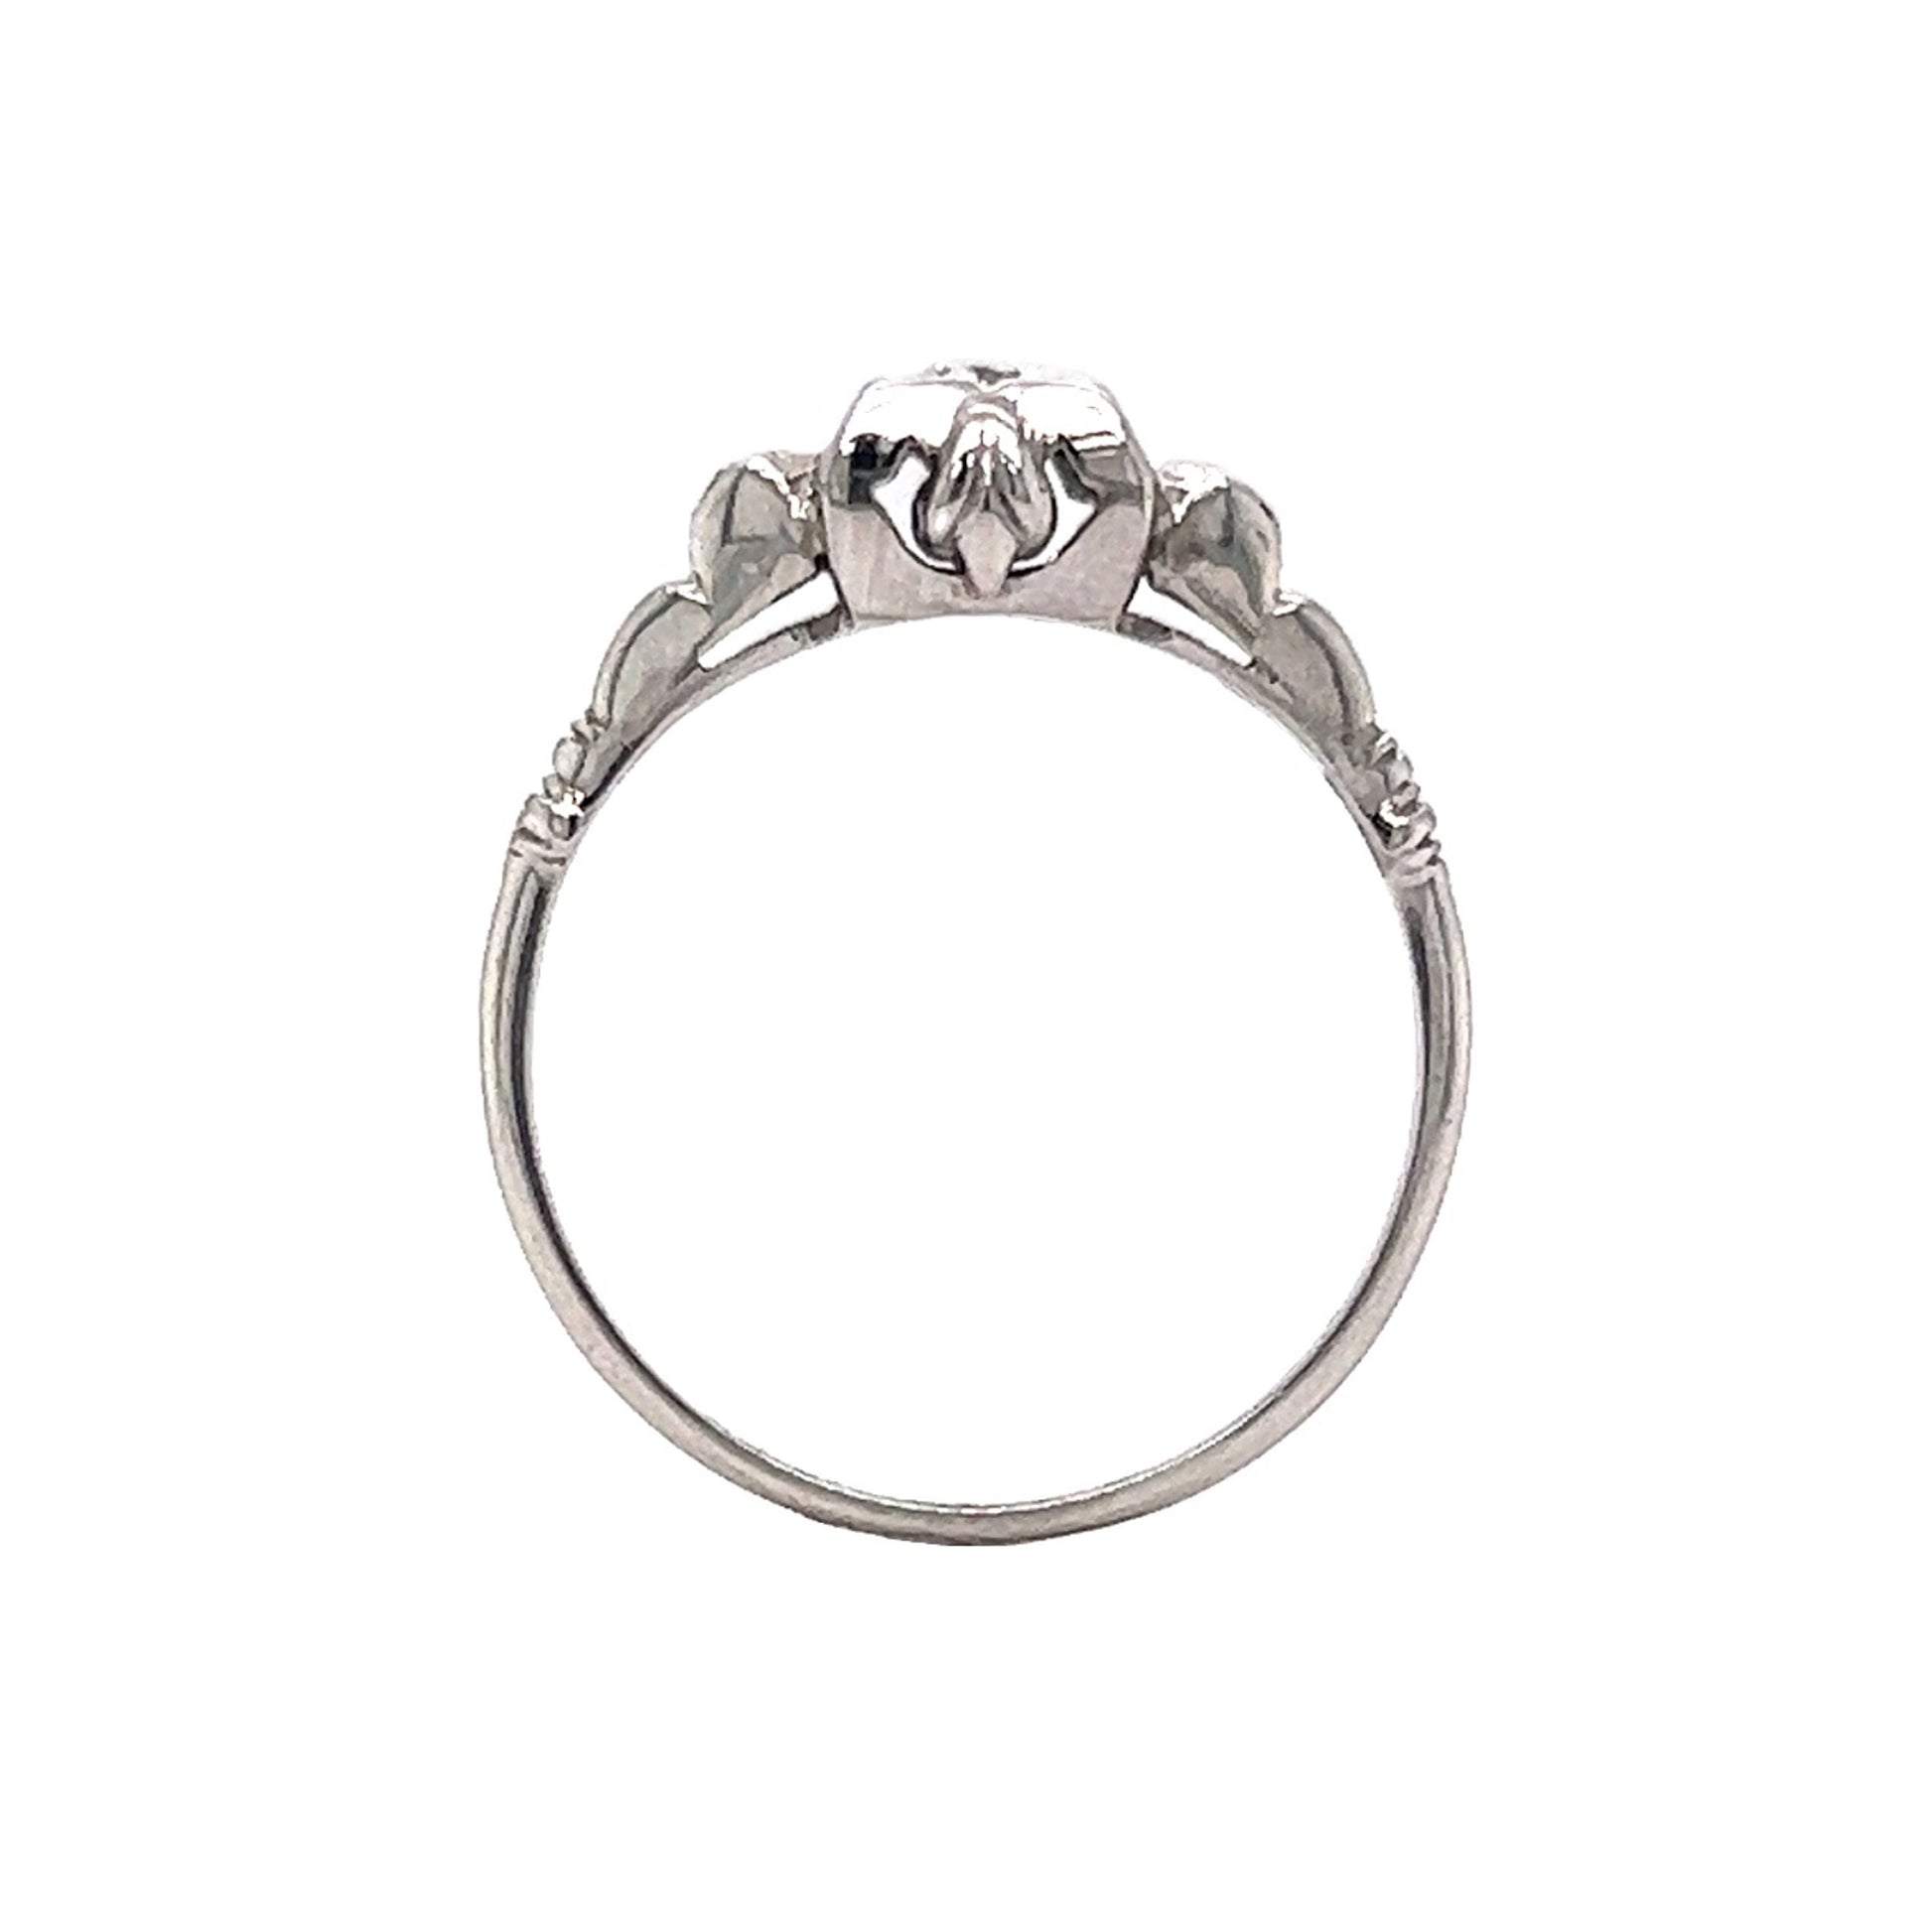 Vintage Deco European Cut Diamond Engagement Ring in 14k